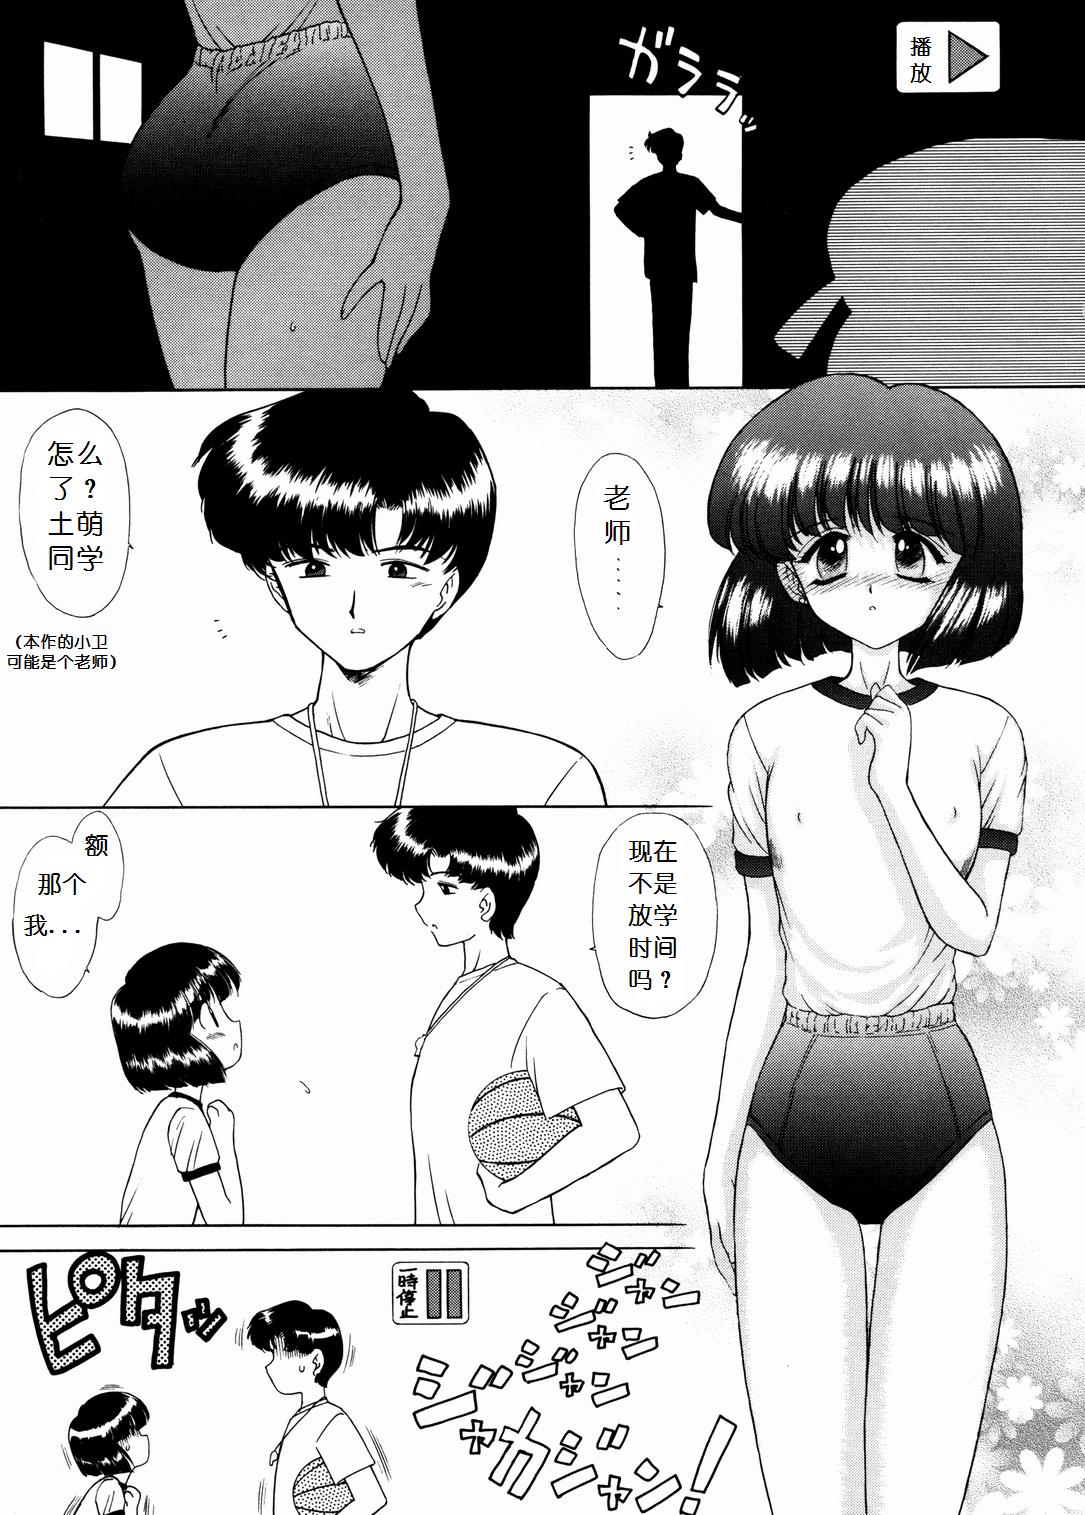 Blow Jobs Porn talking head and judgement - Sailor moon Corno - Page 2